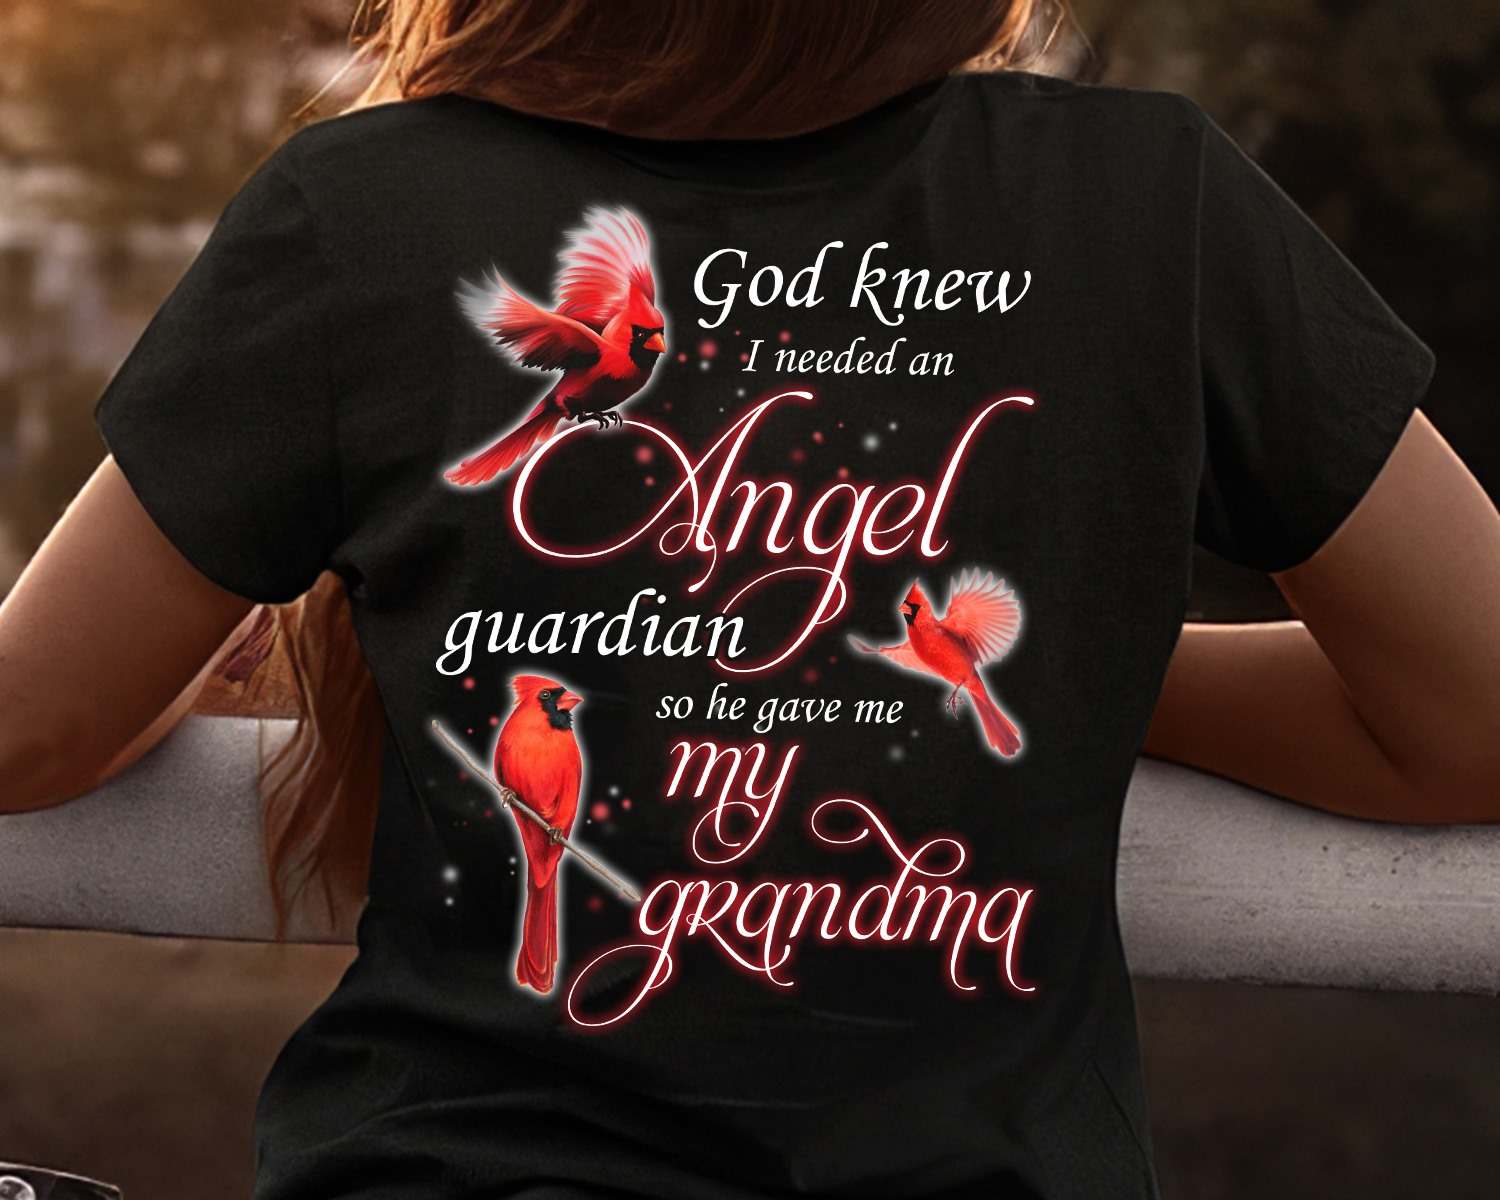 God knew I needed an angel guardian so he gave me my grandma - Cardinal bird